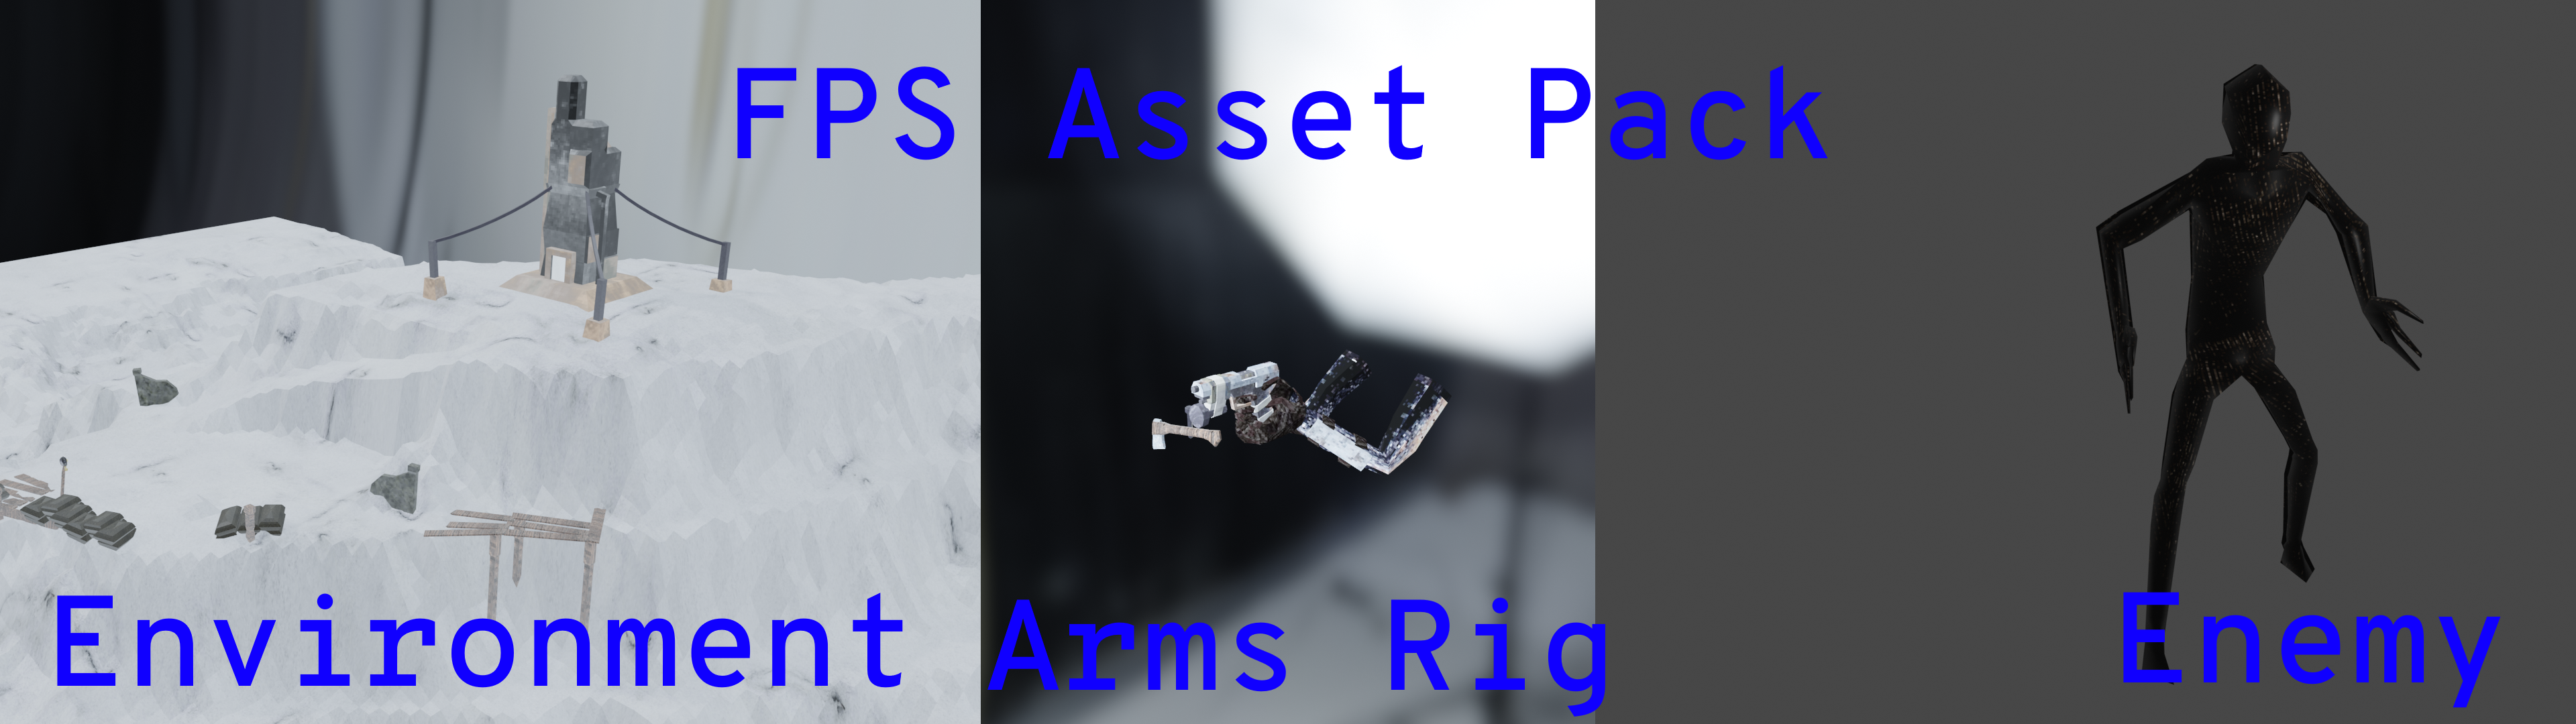 FPS Arms Rig Asset Pack